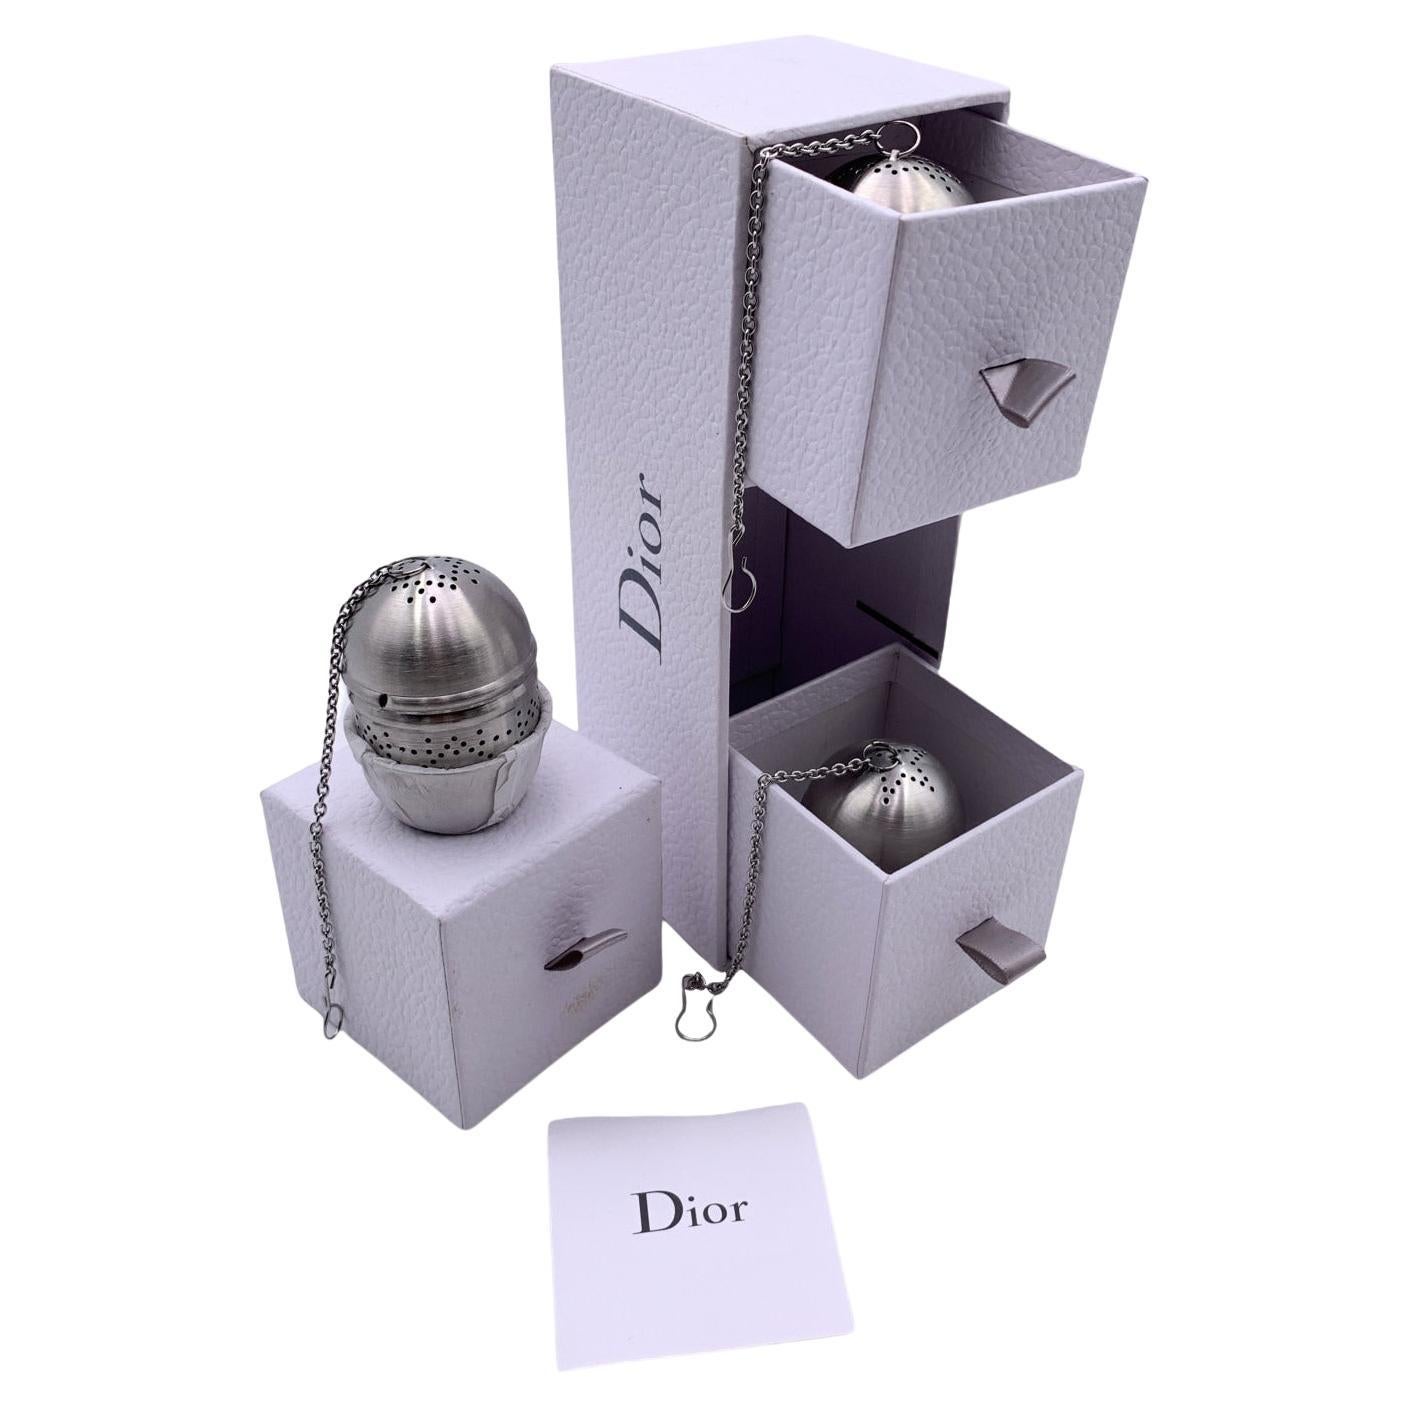 Christian Dior Limited Edition Tea Time Silver Metal Tea Infuser Set